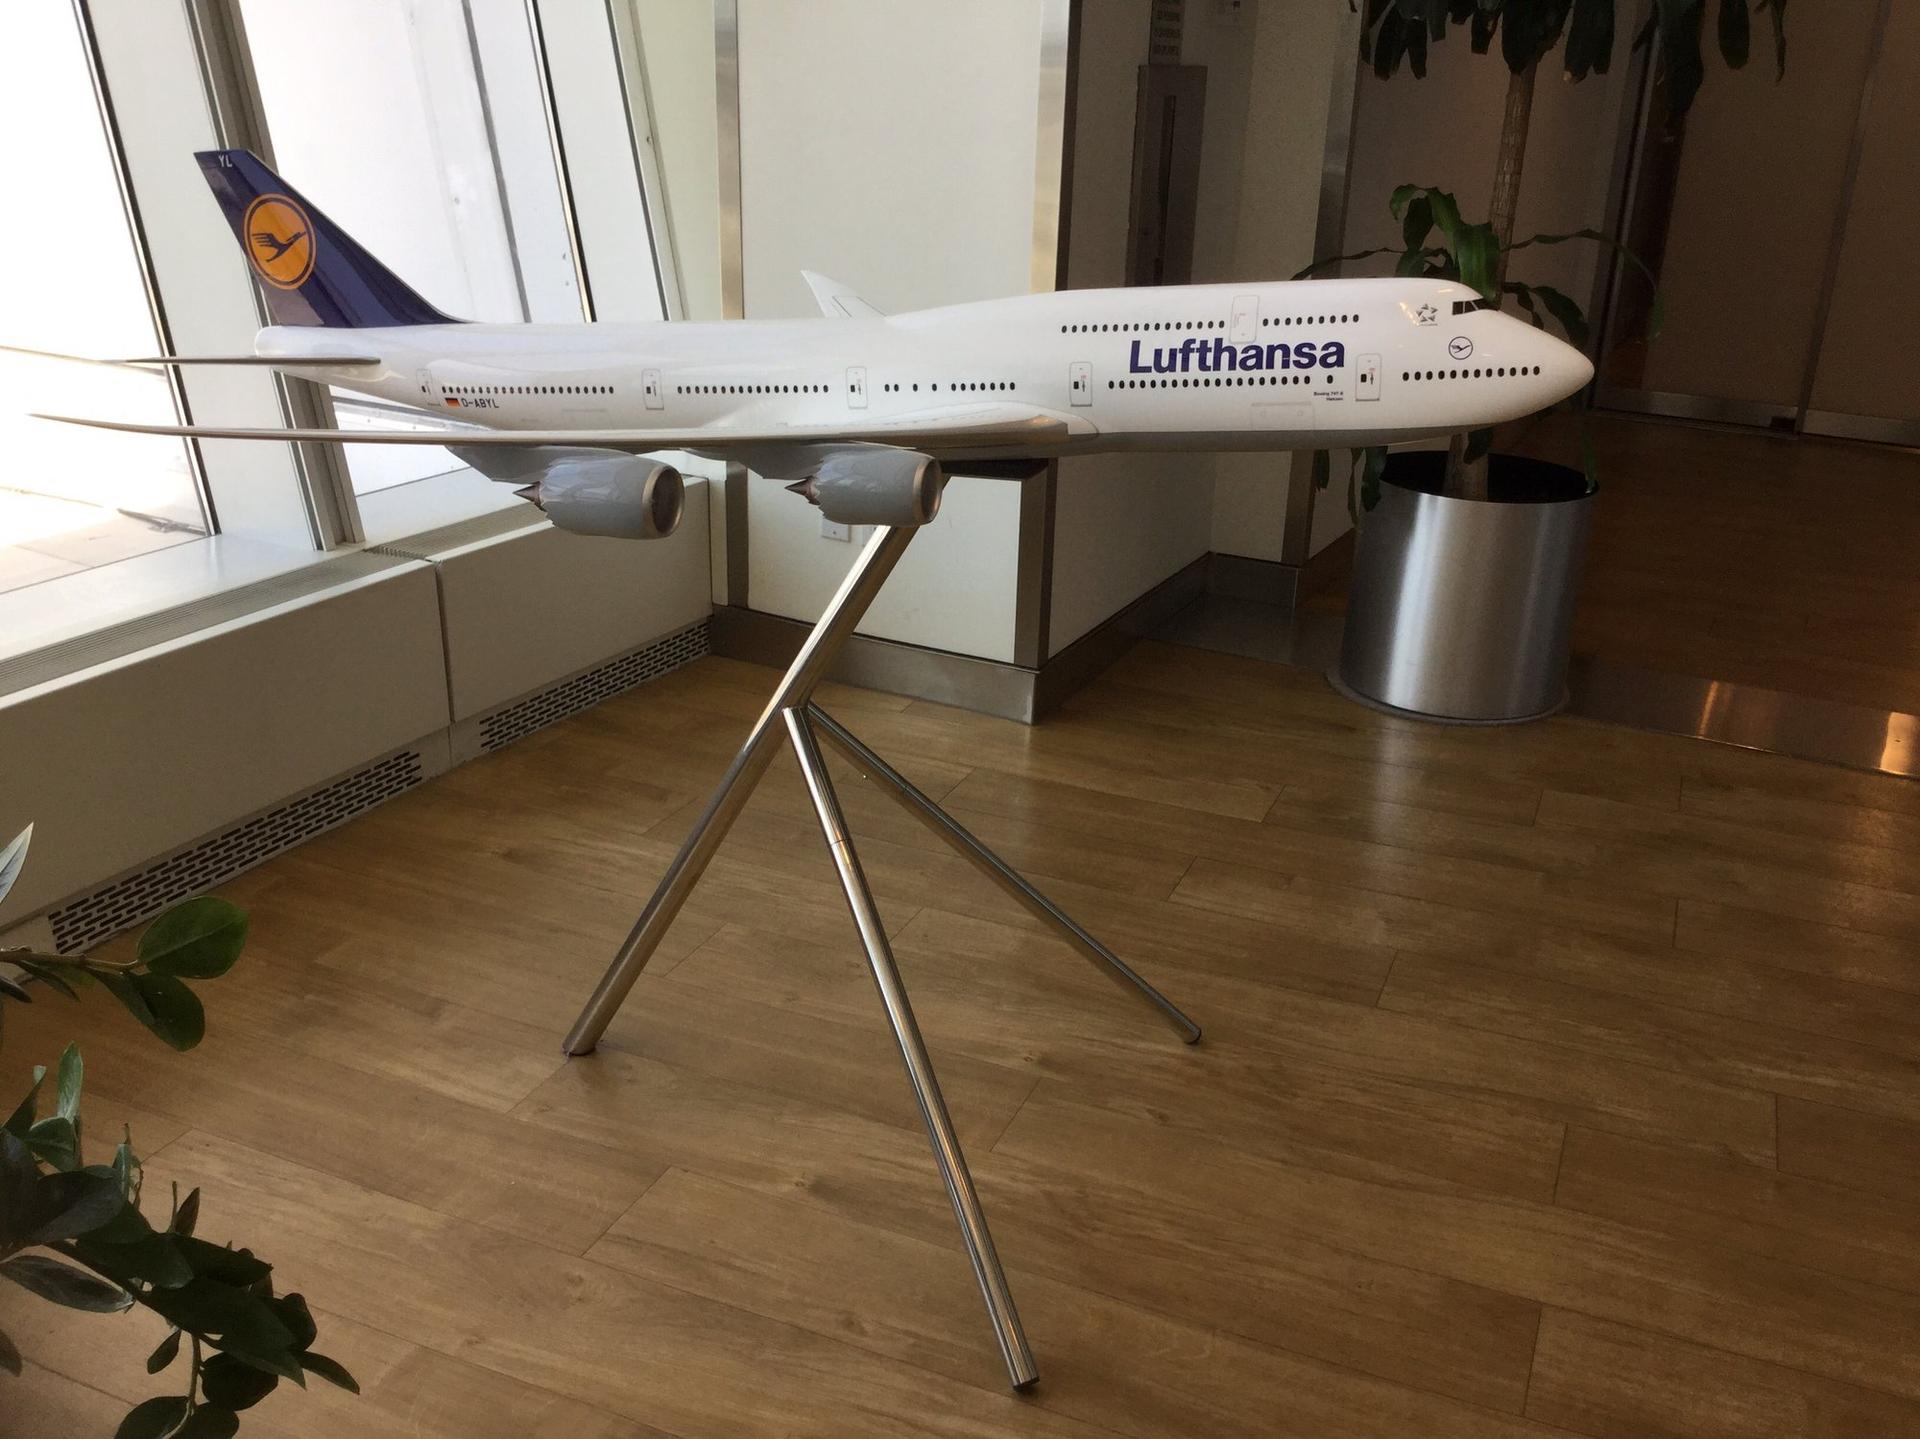 Lufthansa Business Lounge image 24 of 39